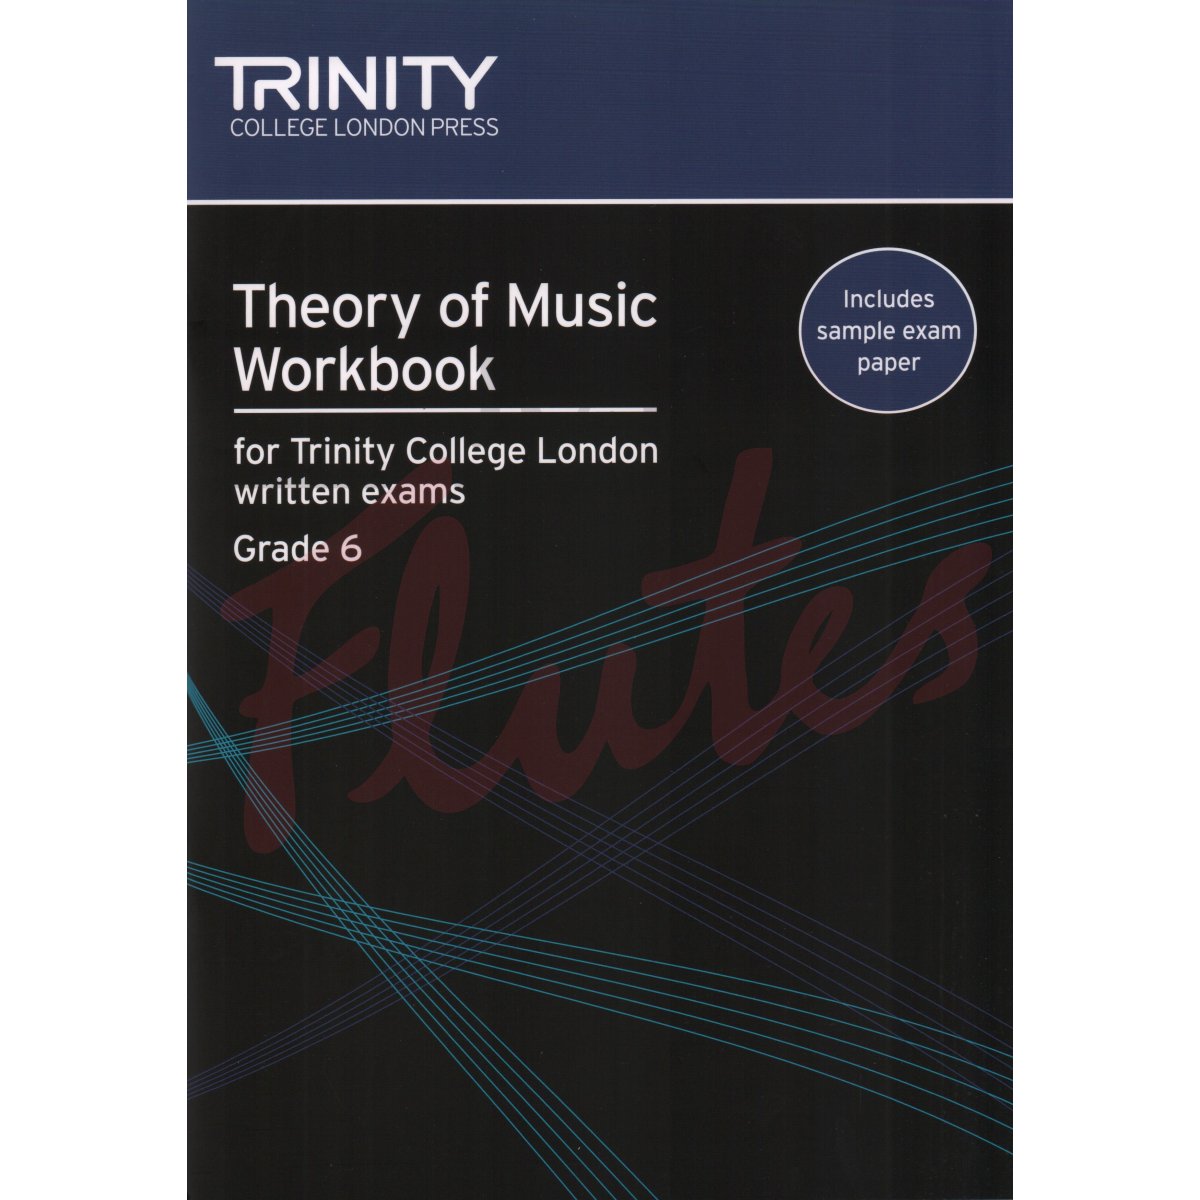 Theory of Music Workbook, Grade 6